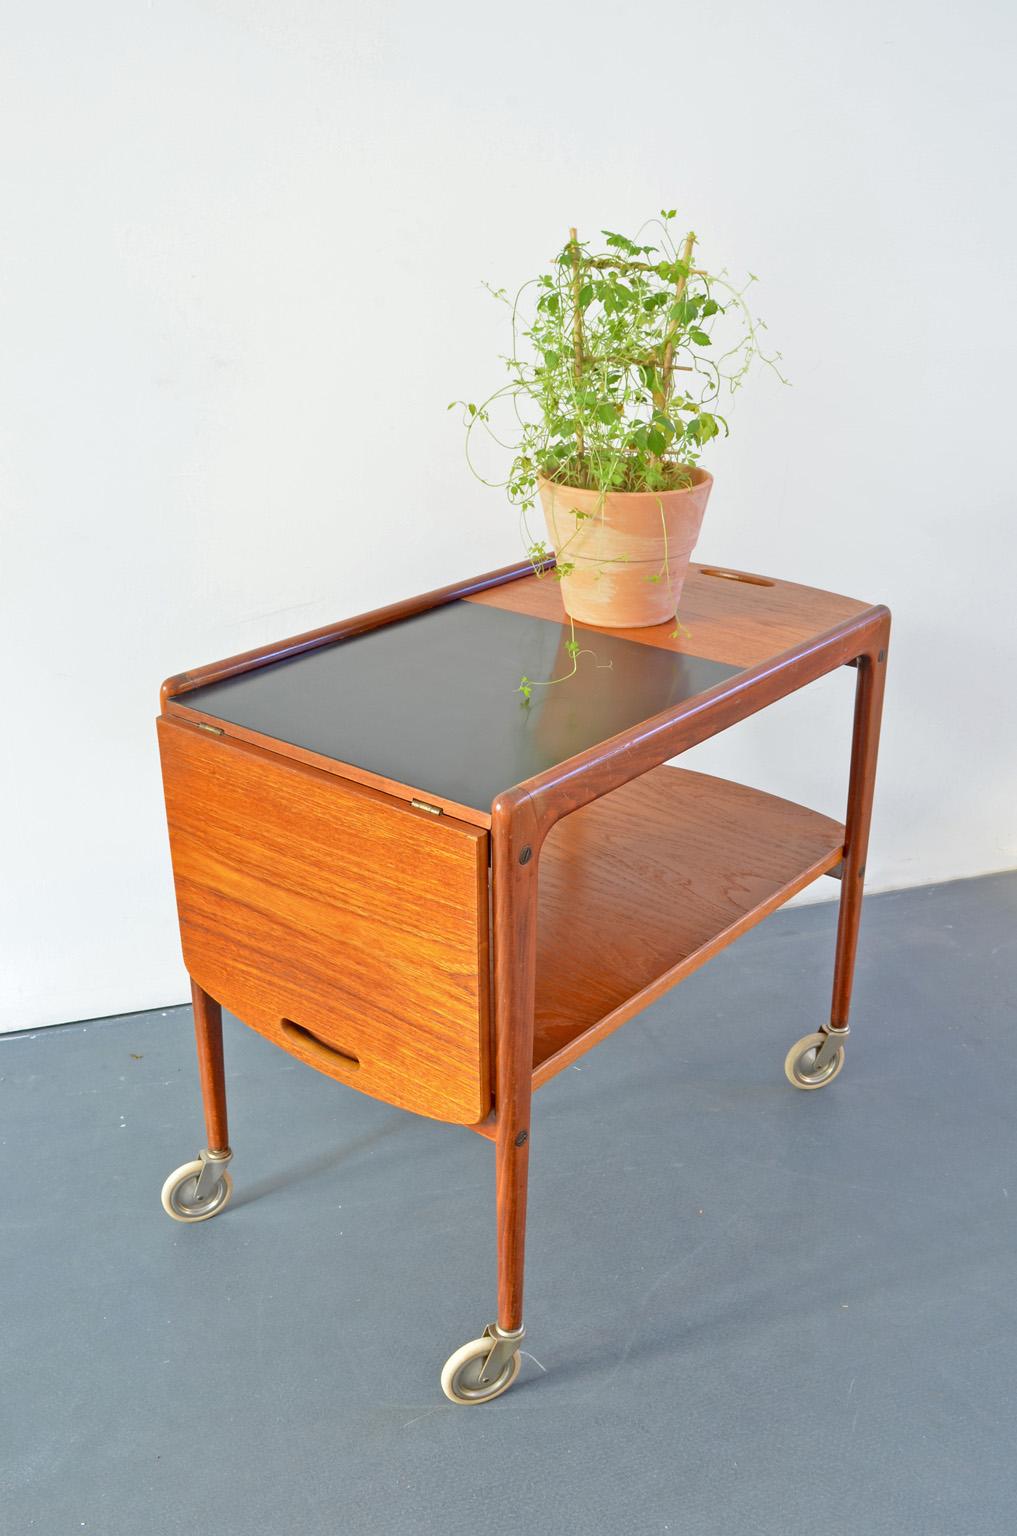 Hinged Side Table / Tea Trolley, 1960s Yngve Ekström for Källemo Teak Bar Cart (Dänisch)